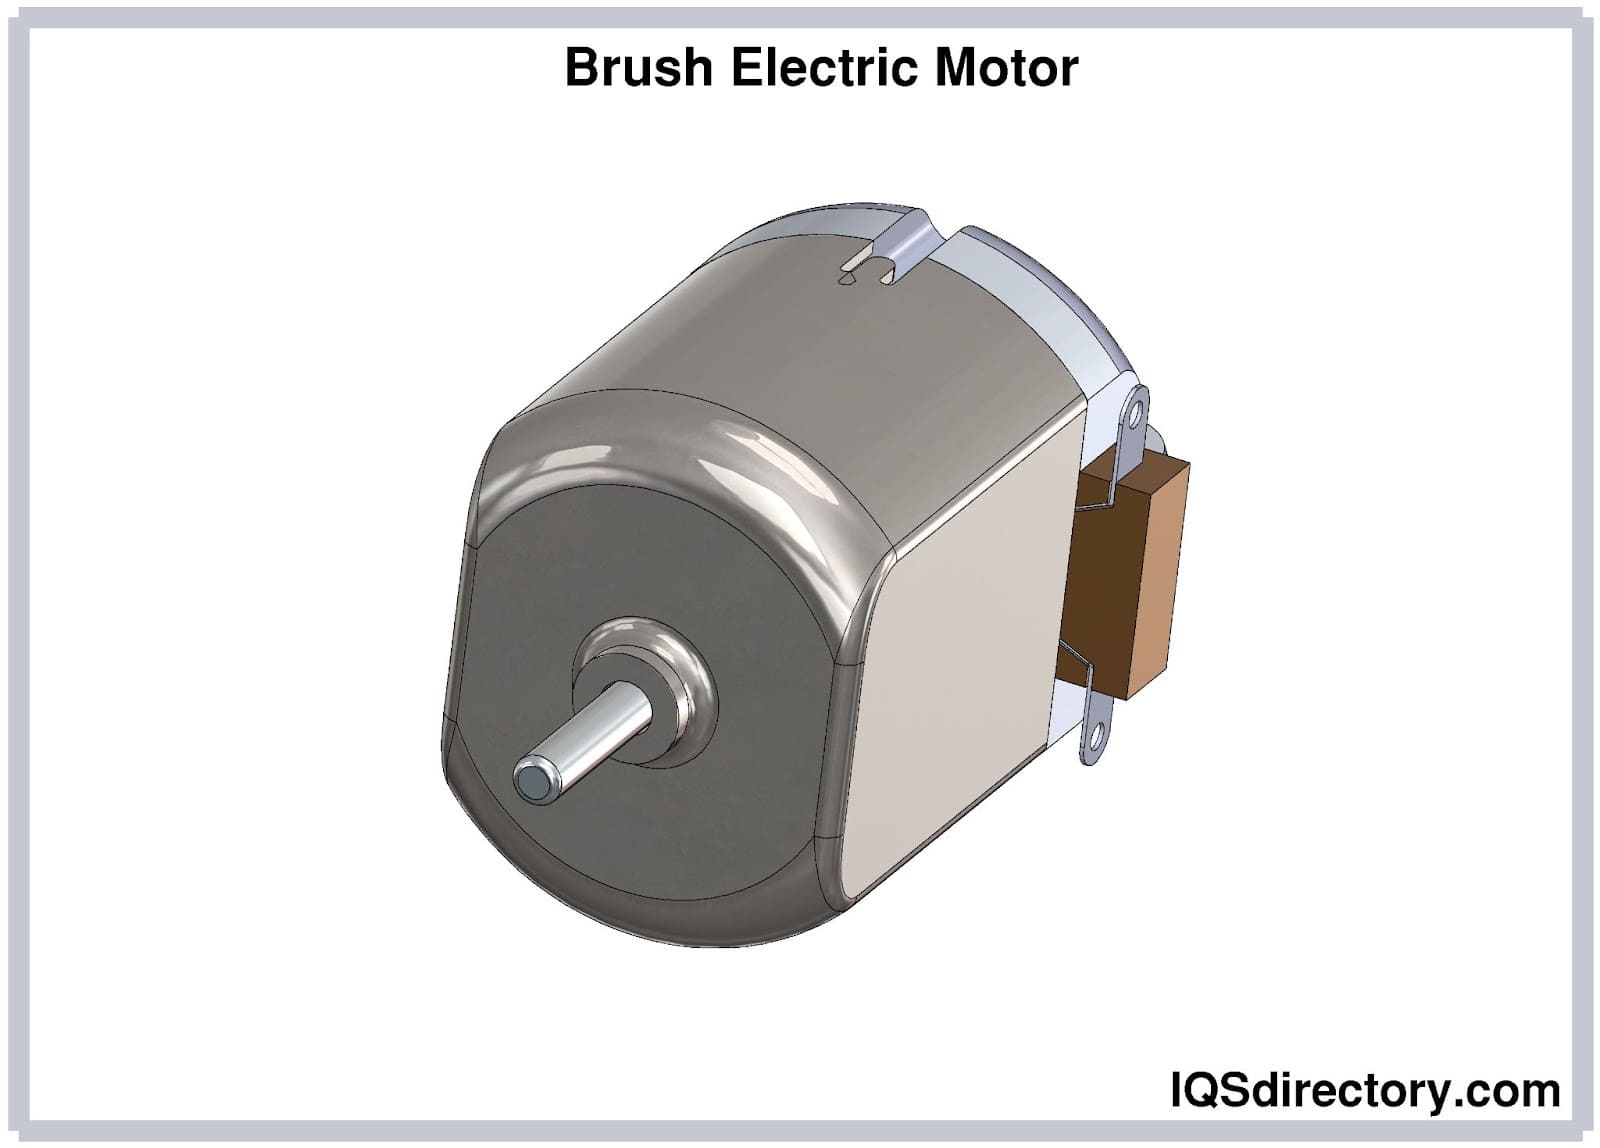 Brush Electric Motor